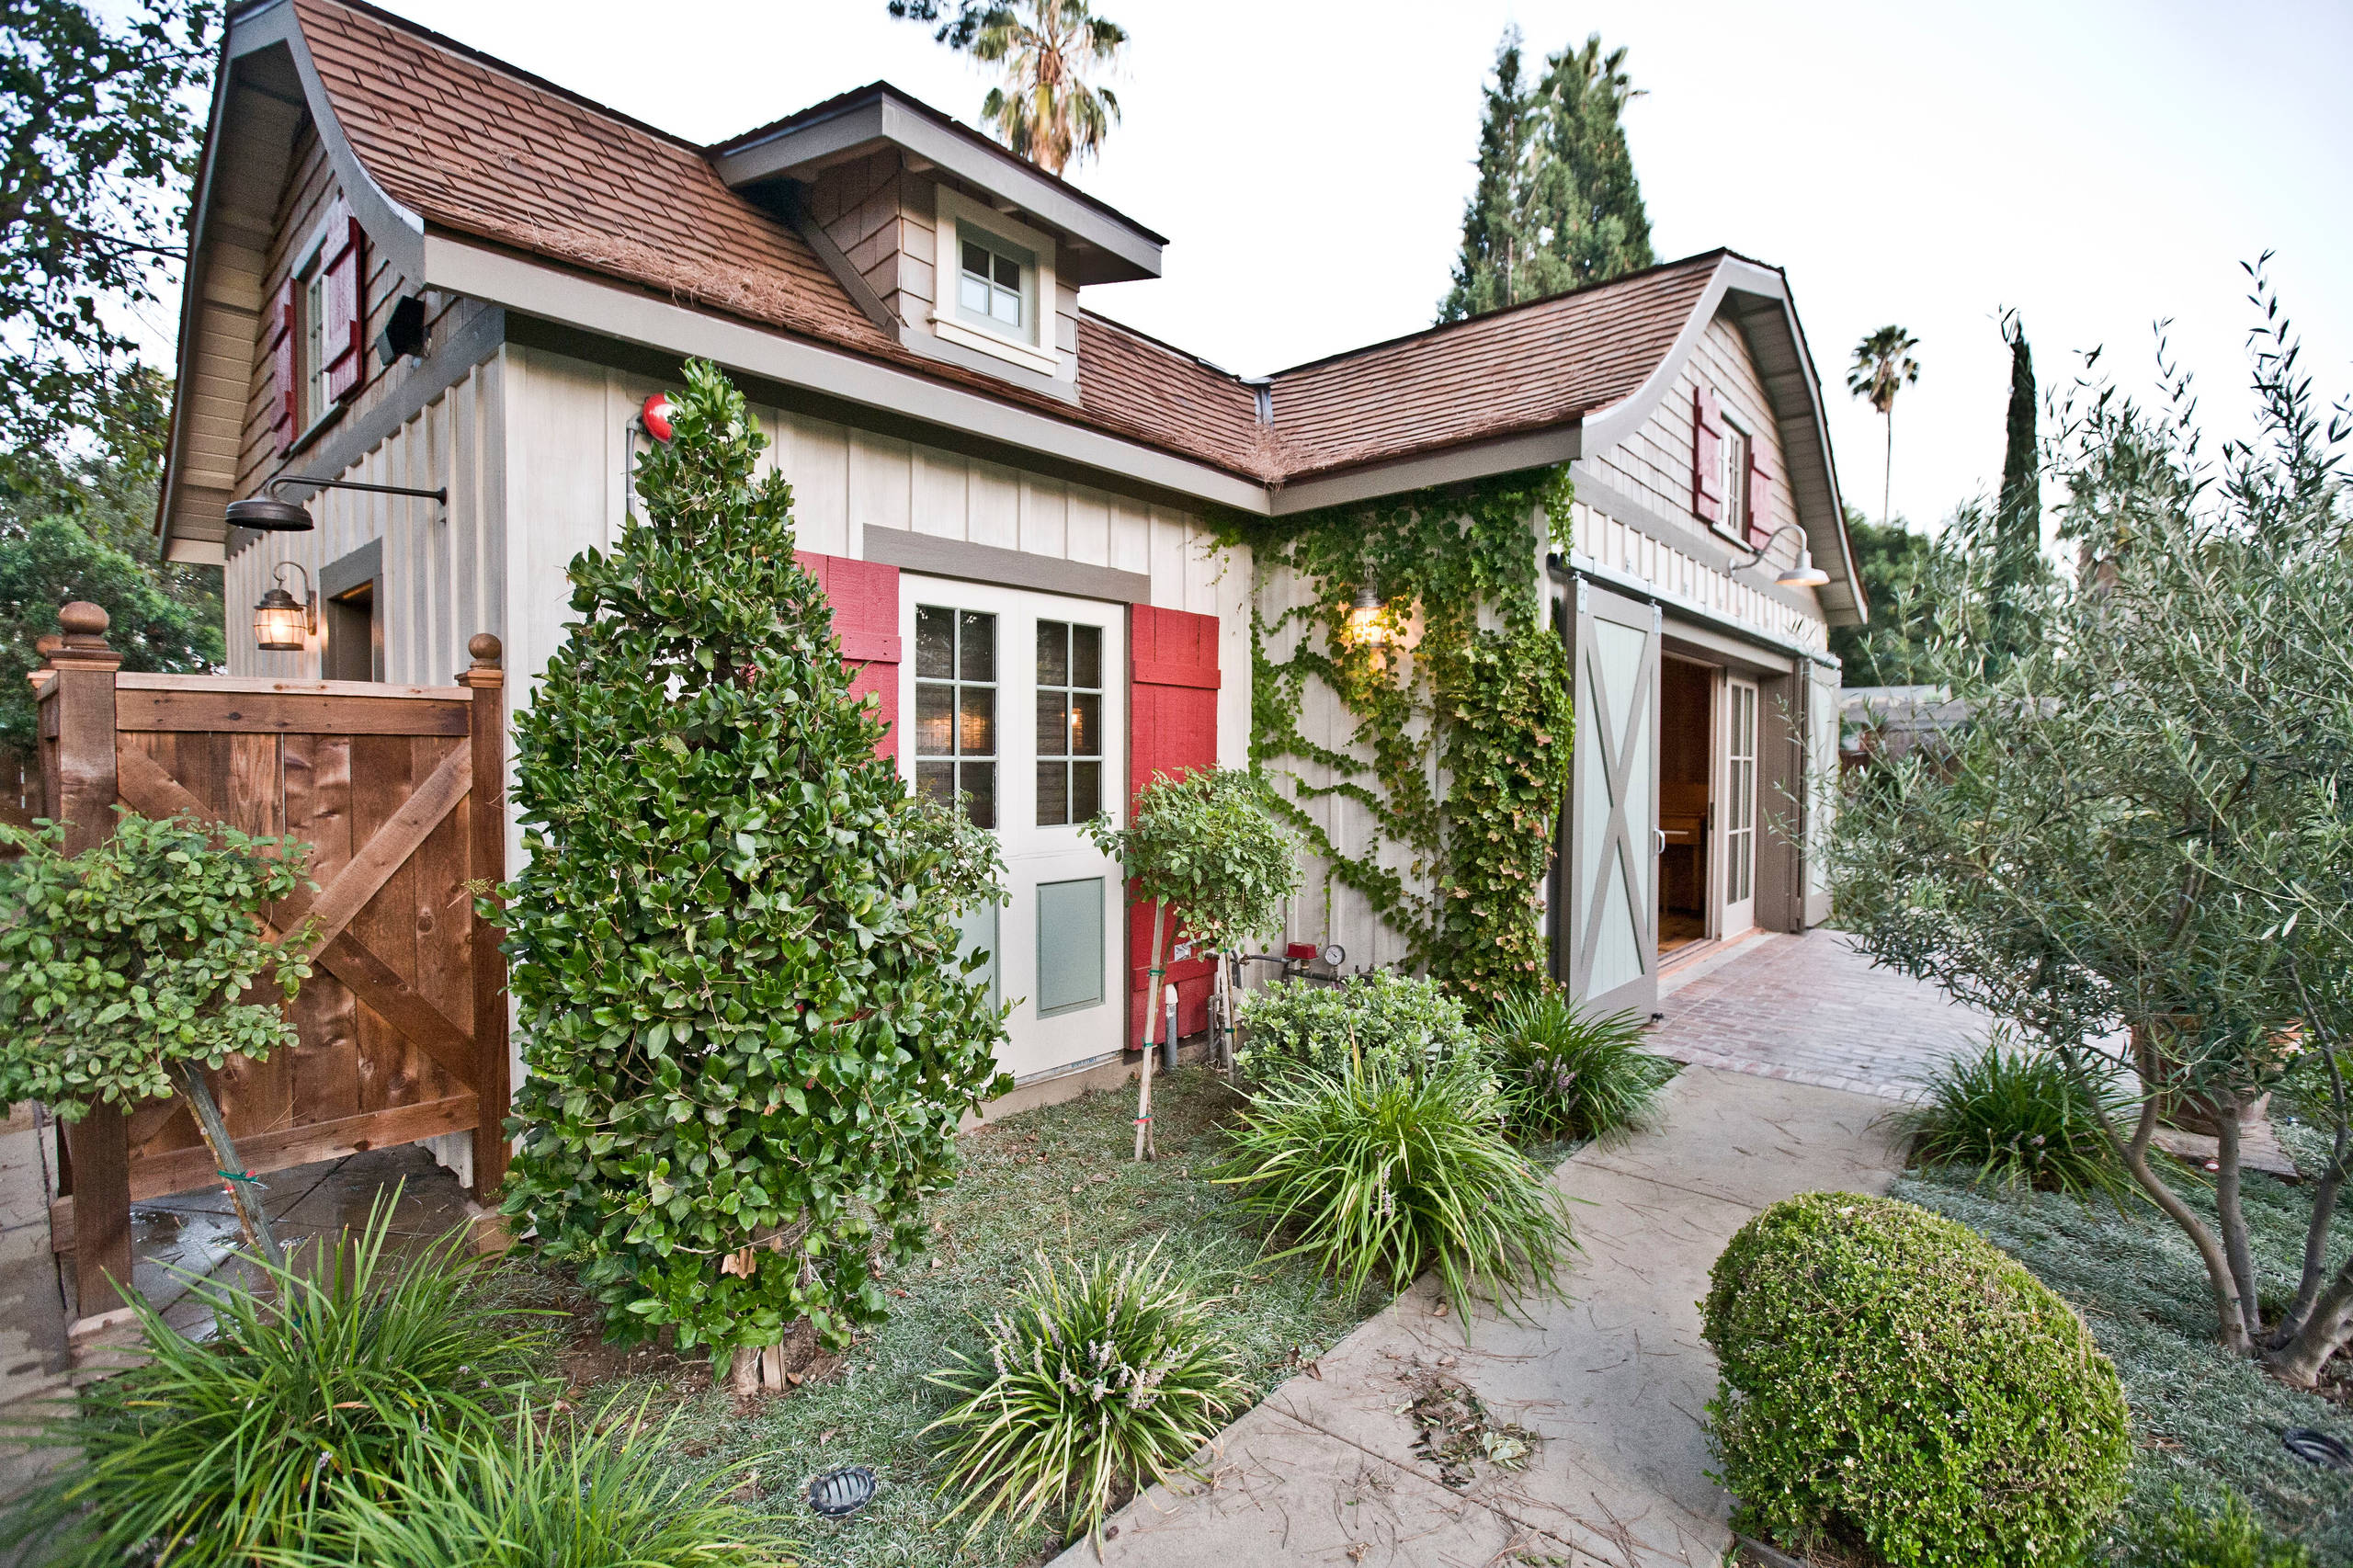 Shingle Style Barn and Poolhouse in Pasadena